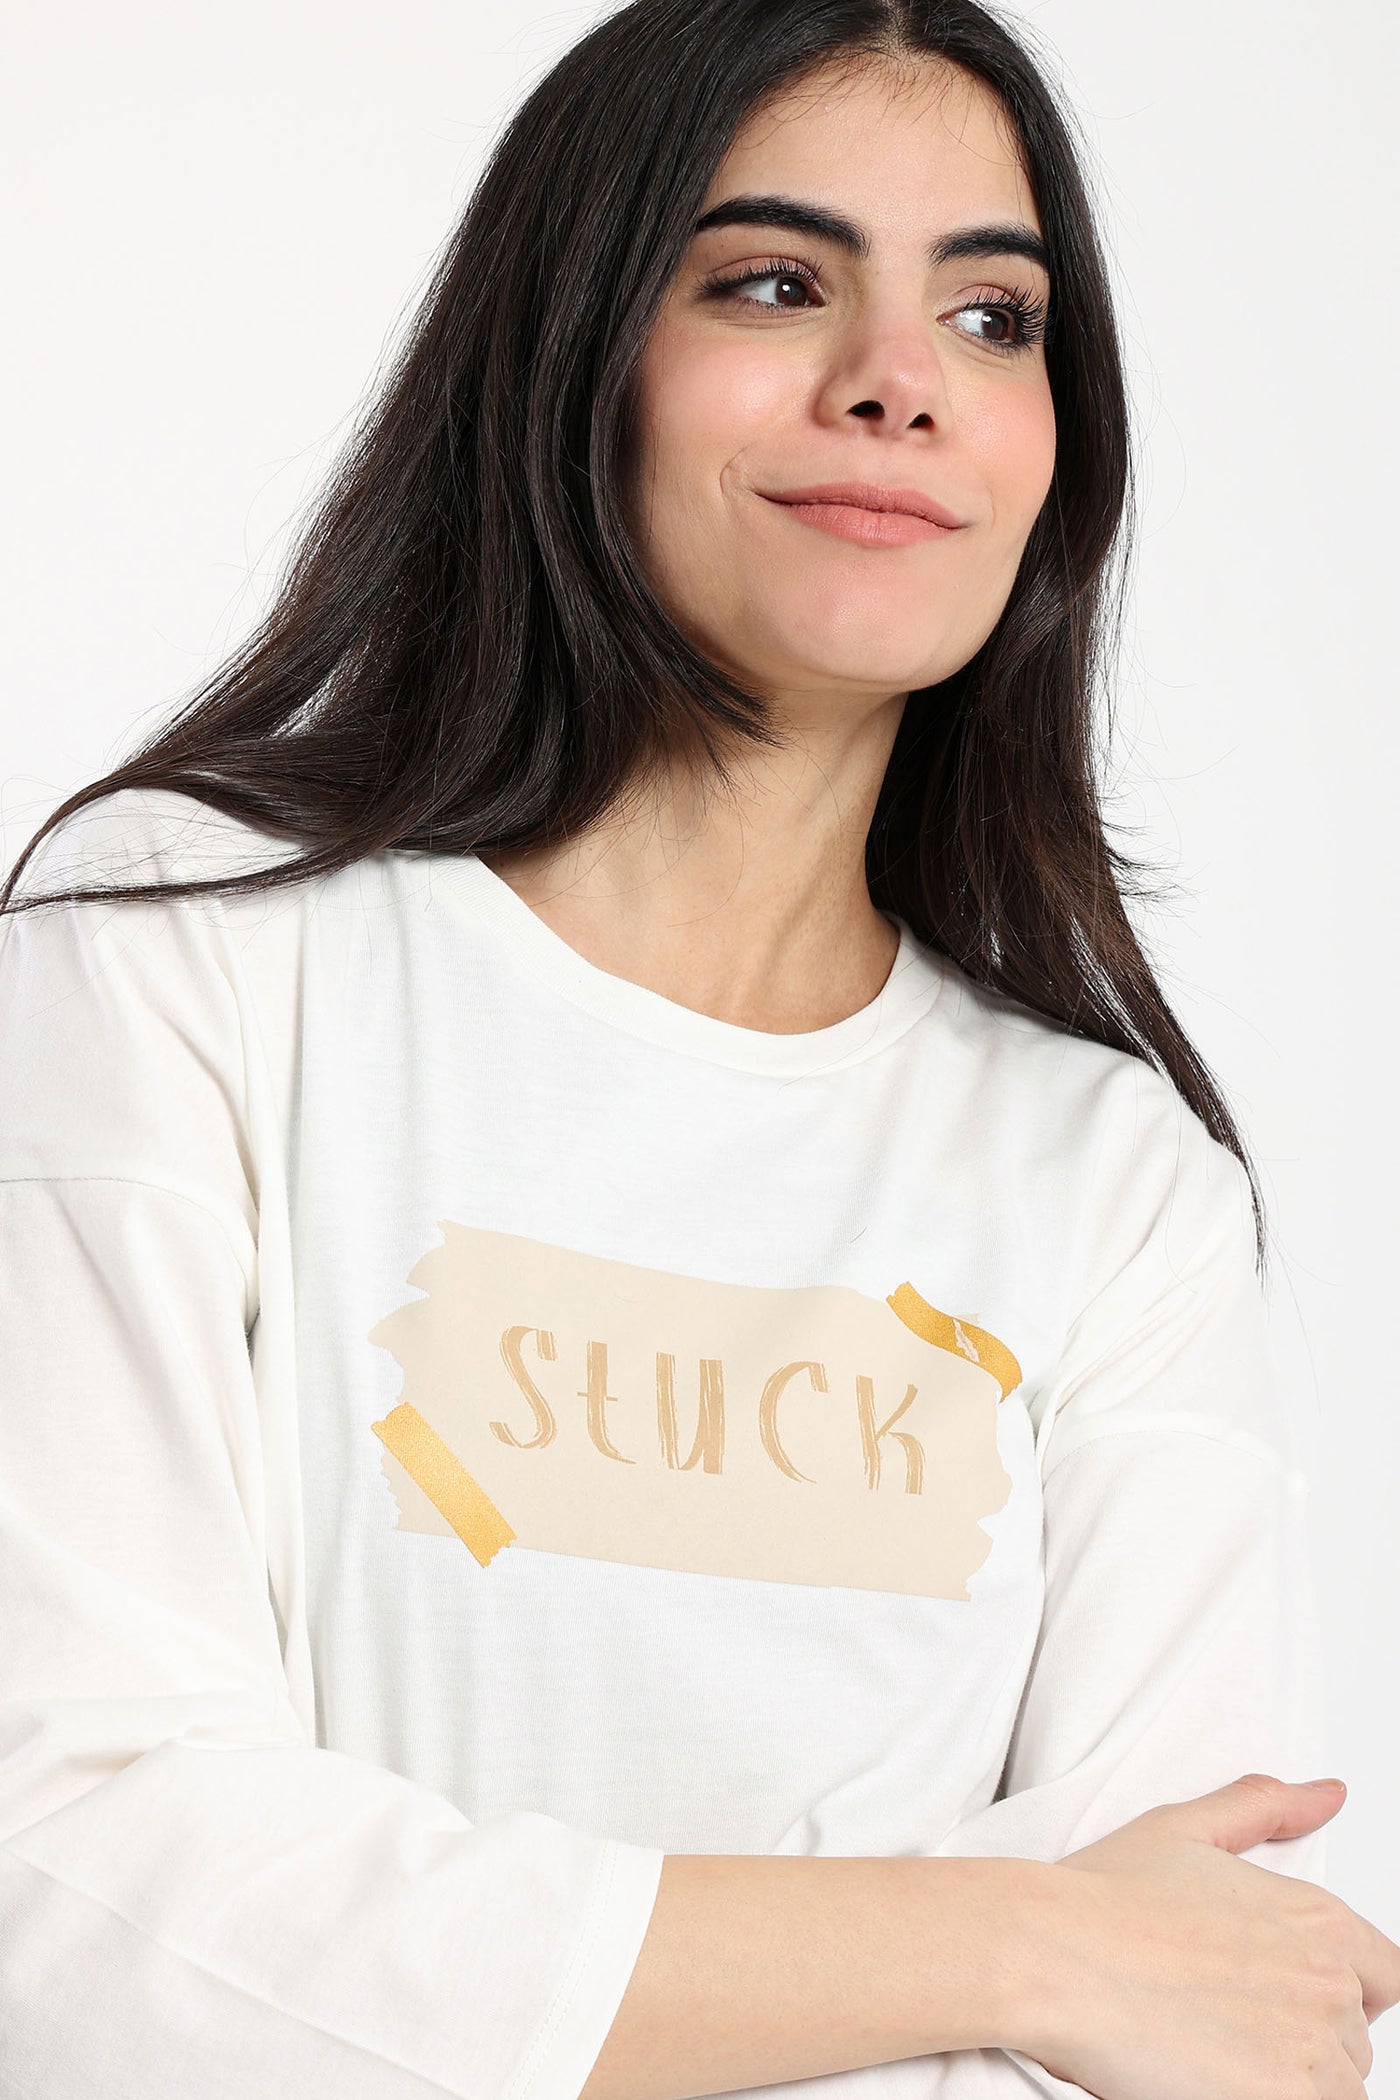 T-Shirt - "Stuck" Front Print - Dipped Hem